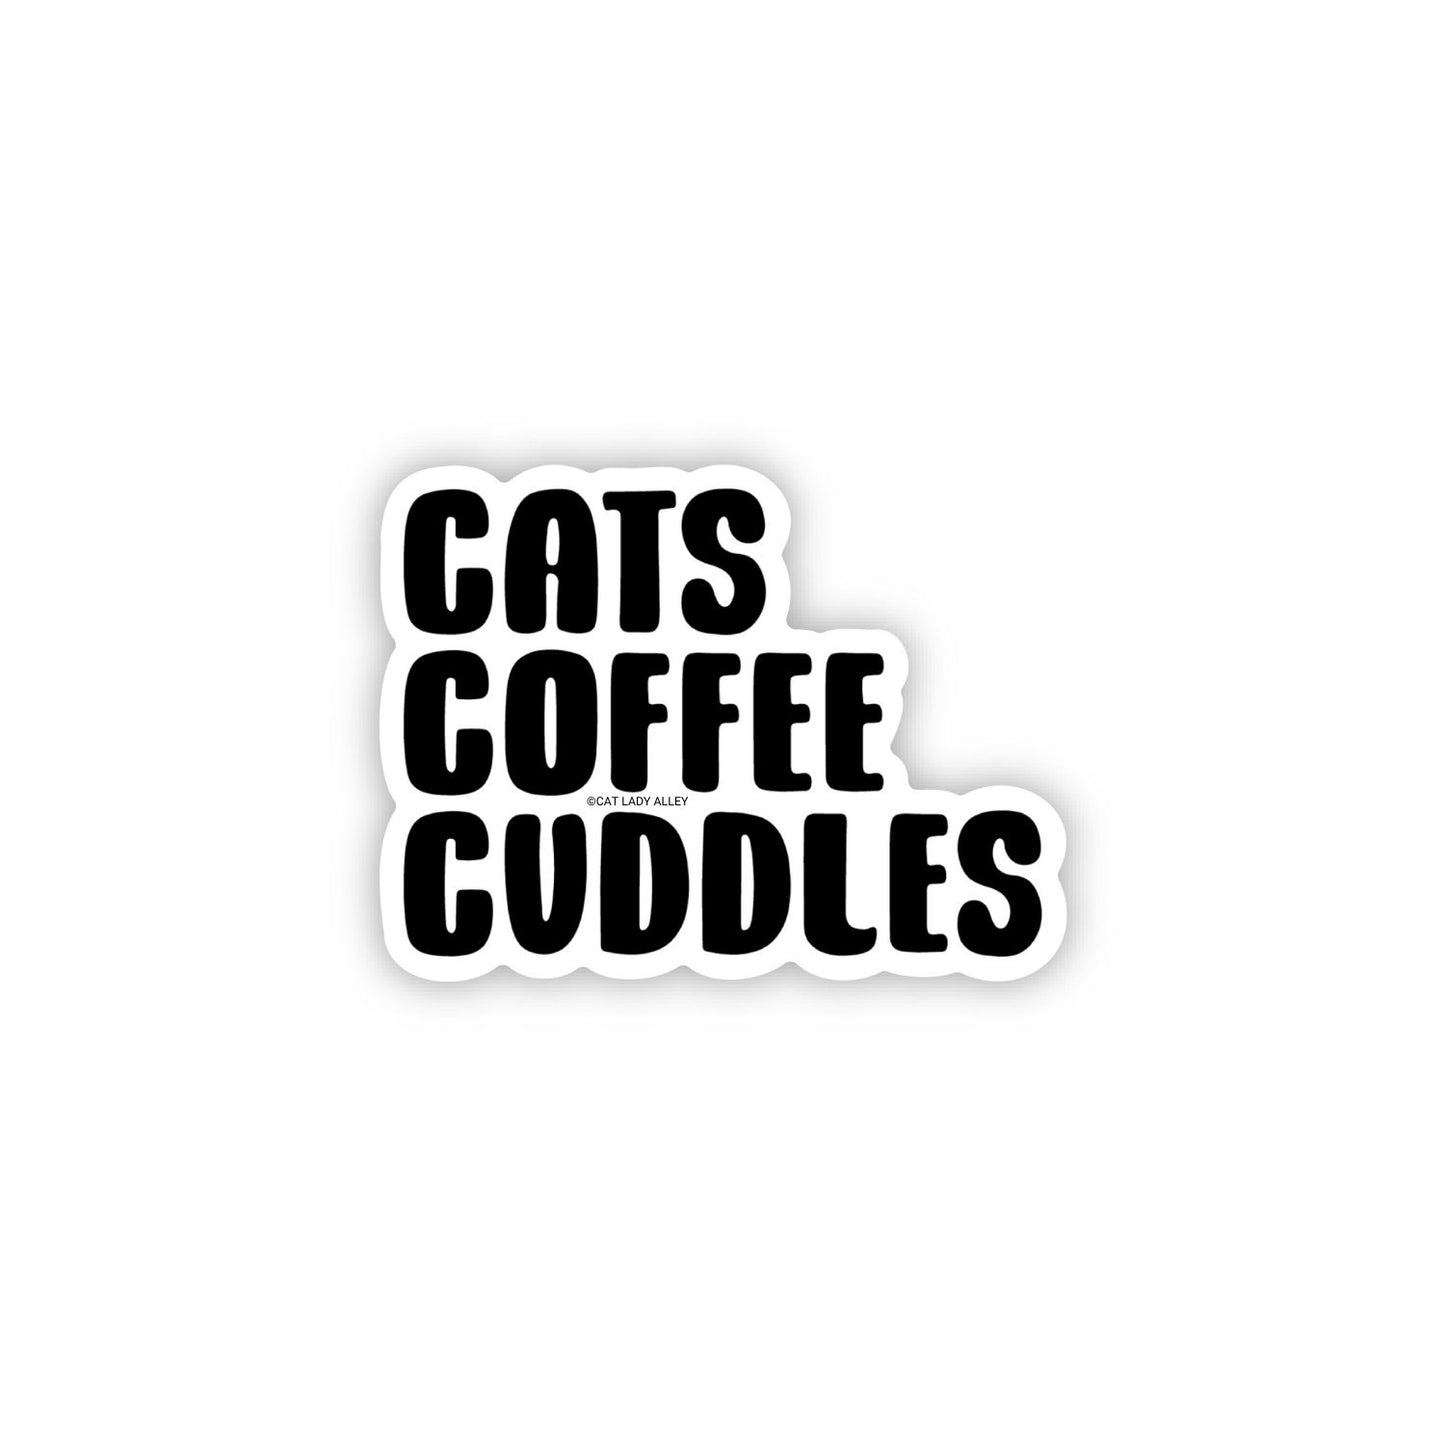 Cats, Coffee, Cuddles Sticker